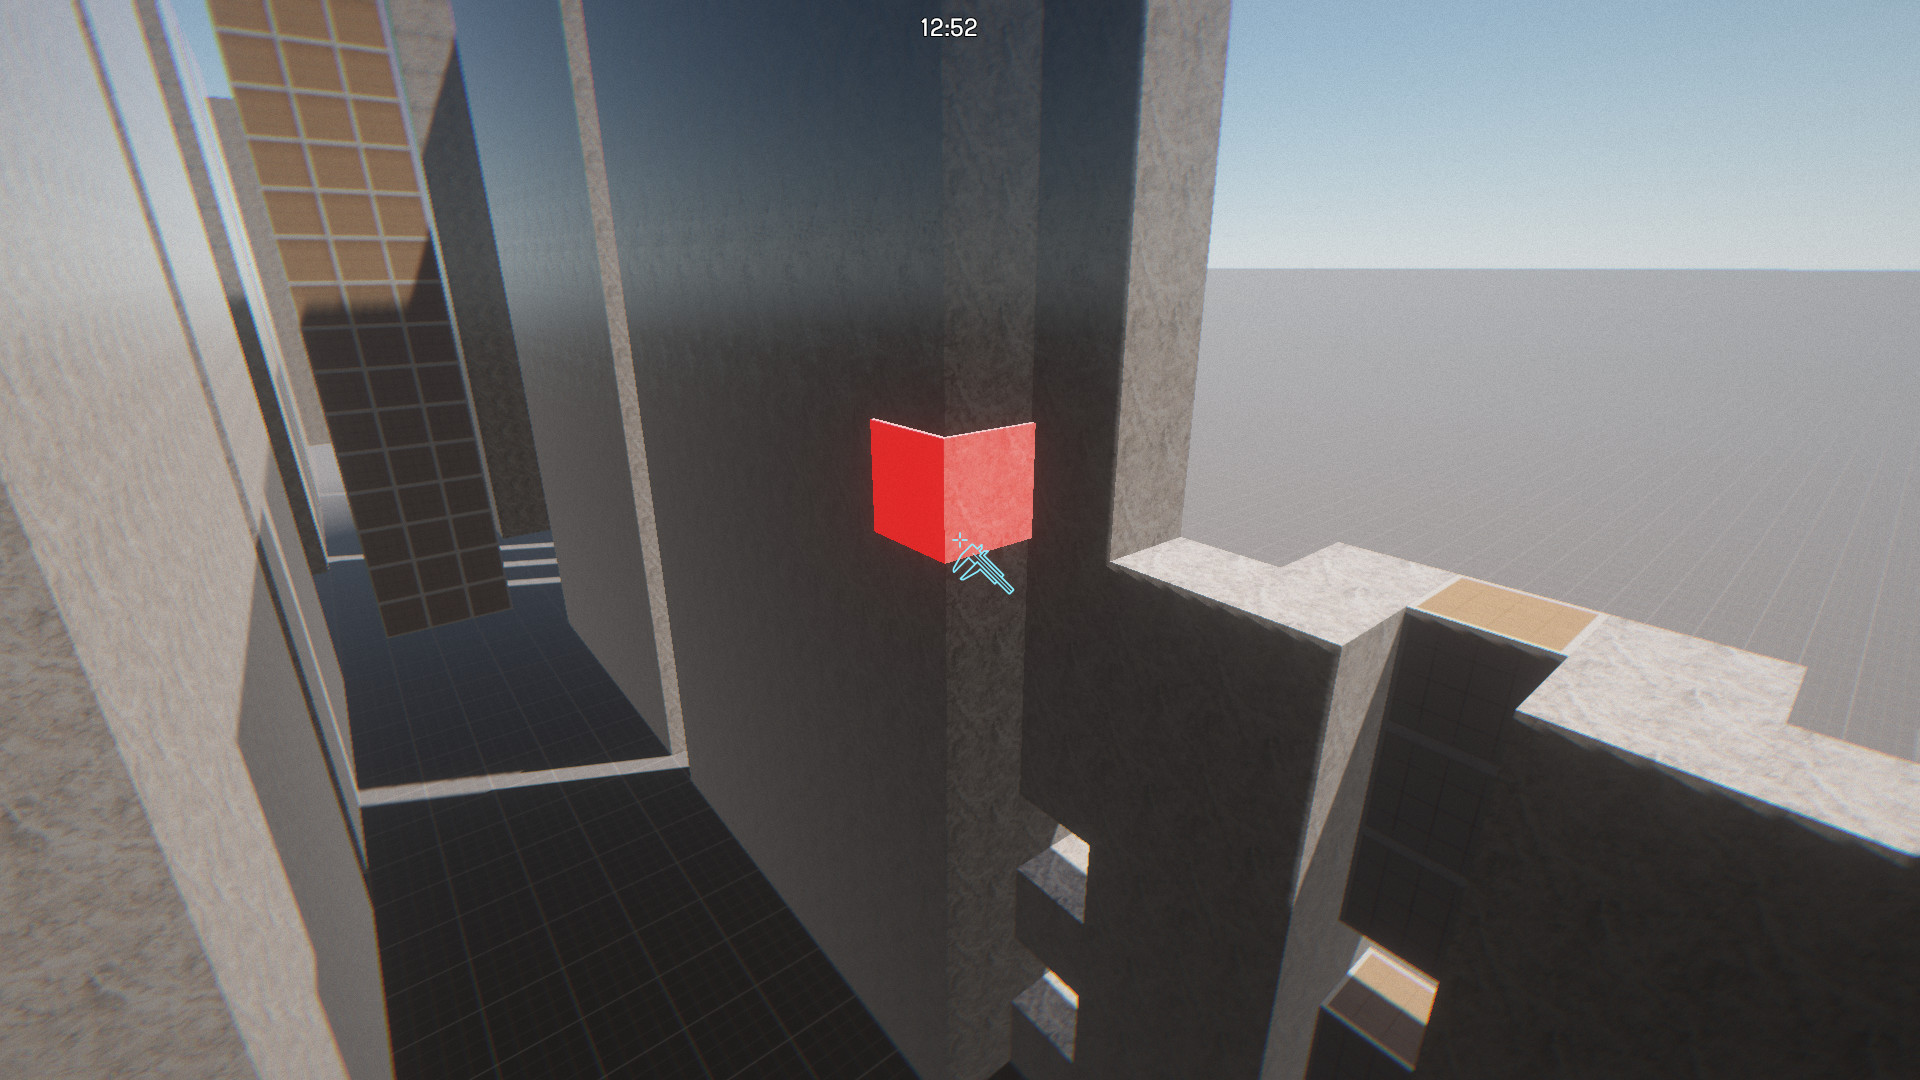 Metaverse Construction Kit screenshot